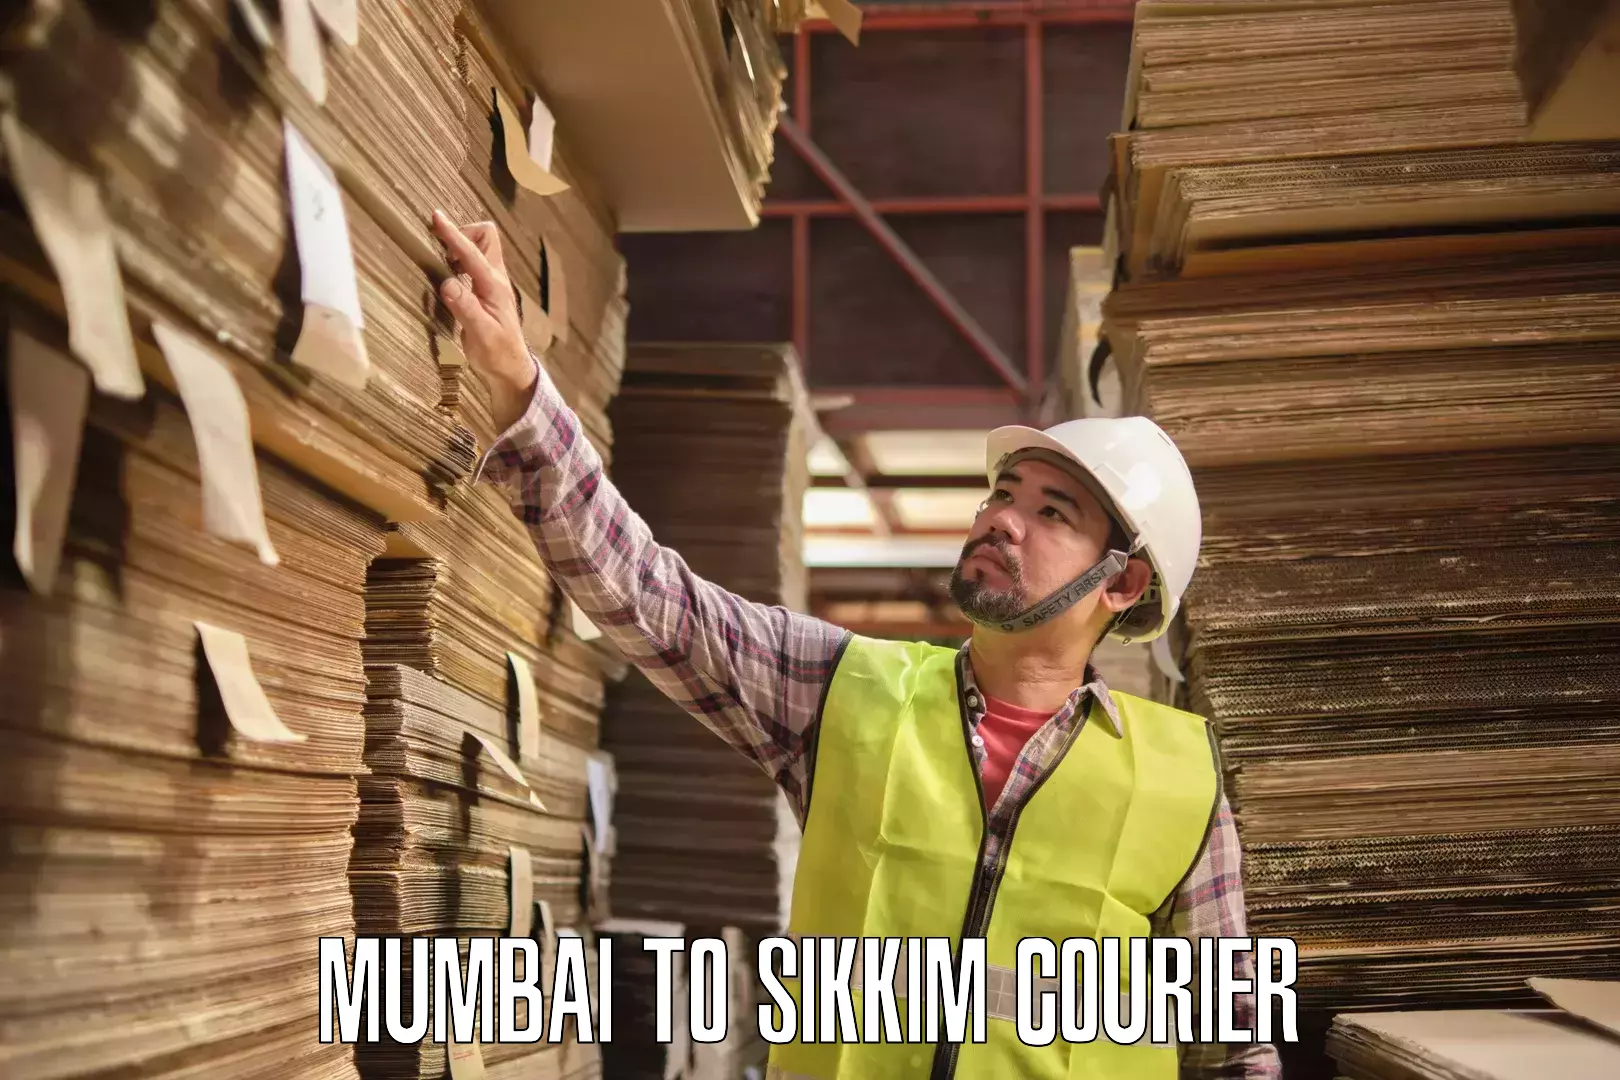 Courier service booking Mumbai to Sikkim